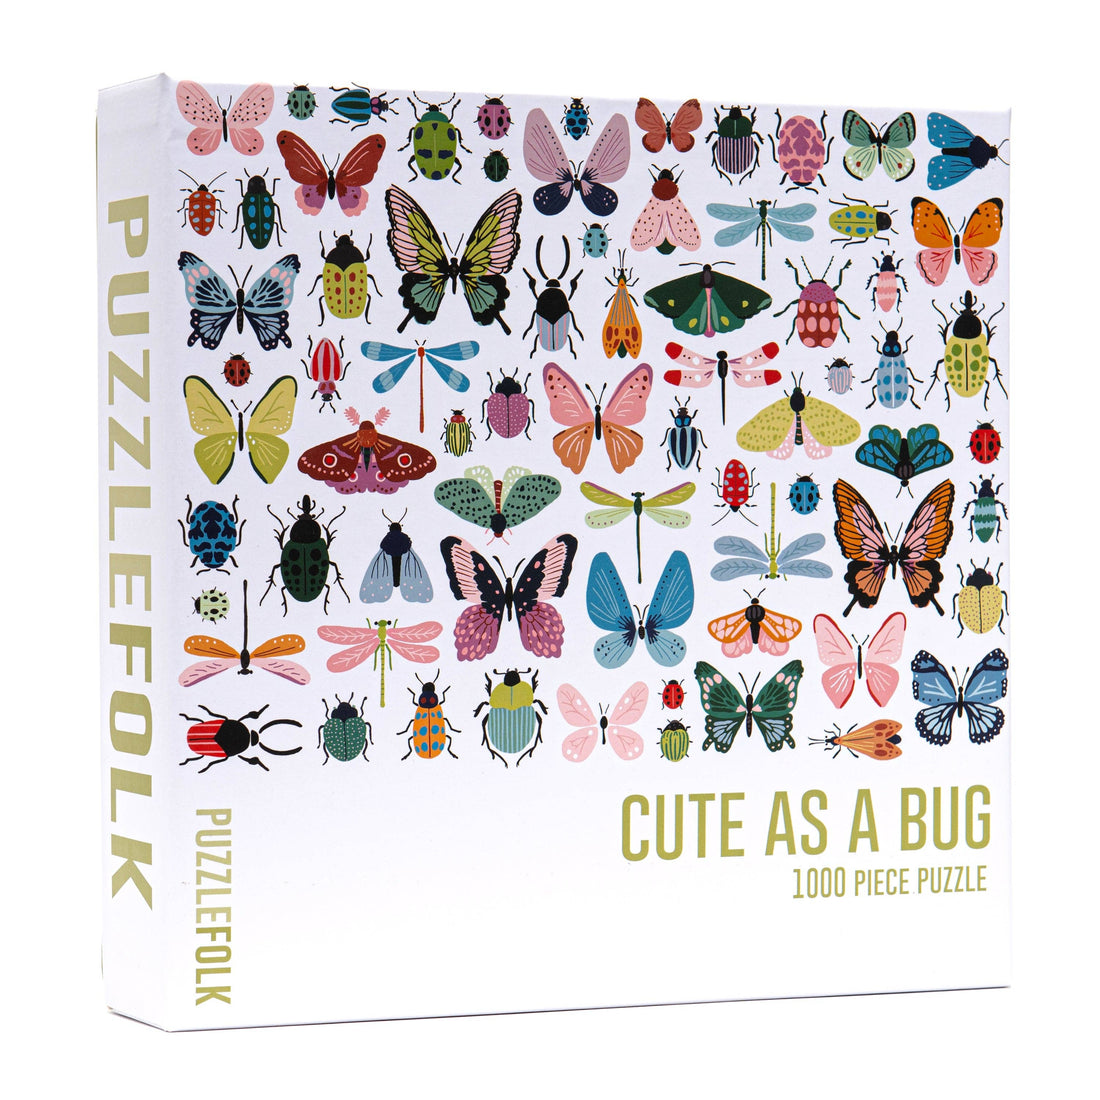 Cute As A Bug 1000 Piece Puzzle by Lauren Waltman